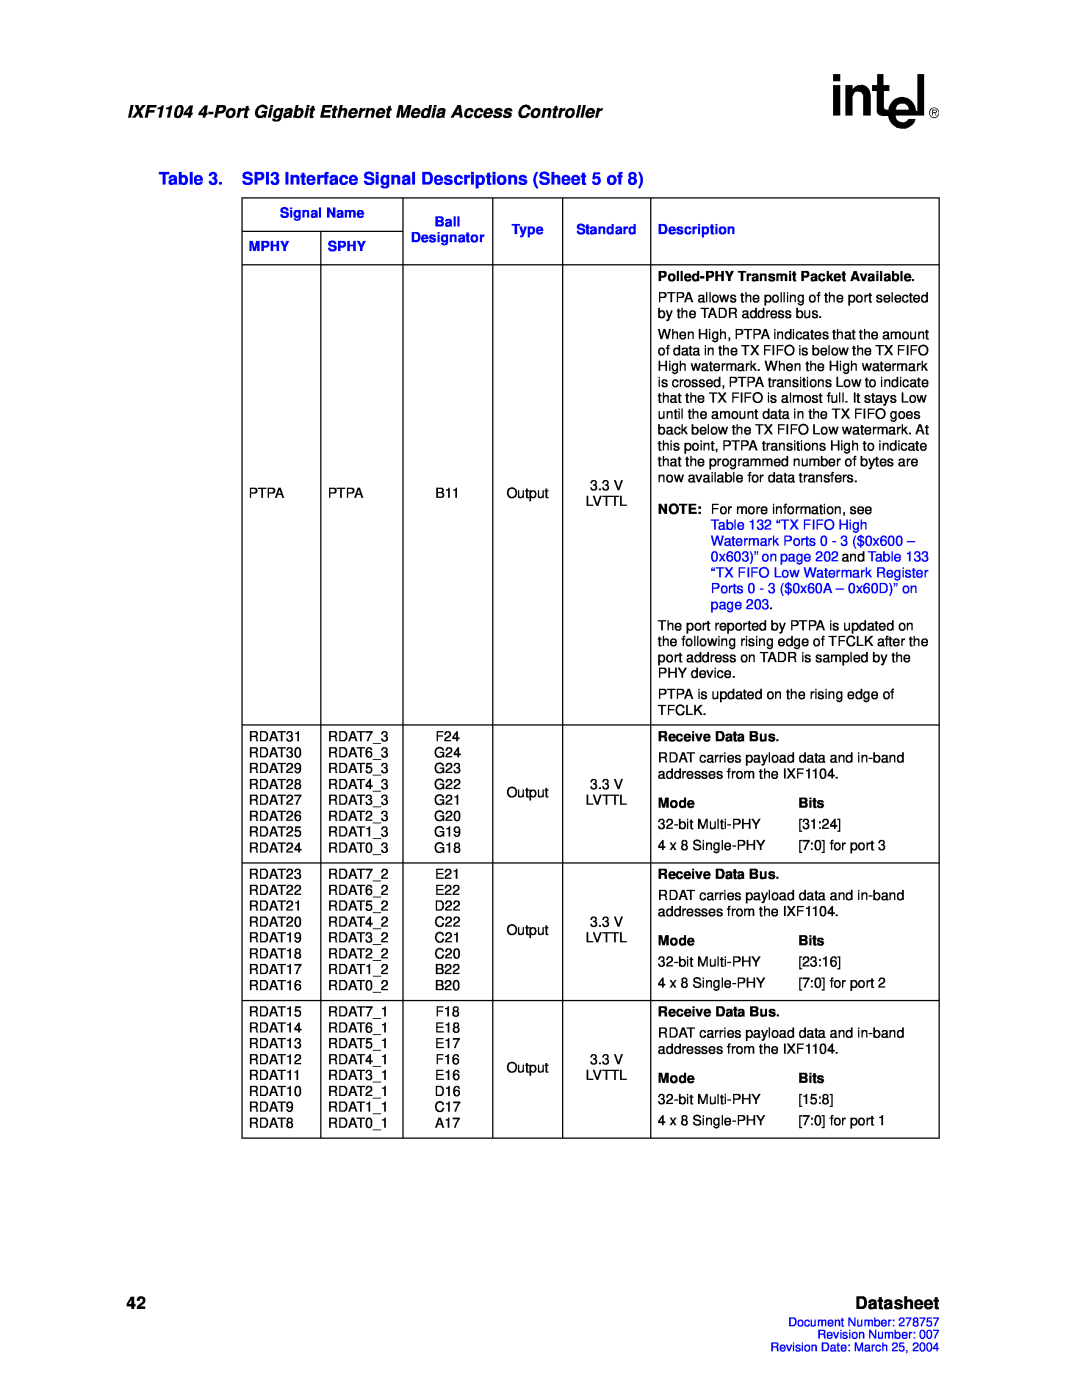 Intel IXF1104 manual Datasheet, Polled-PHYTransmit Packet Available, Receive Data Bus, Mode, Bits 